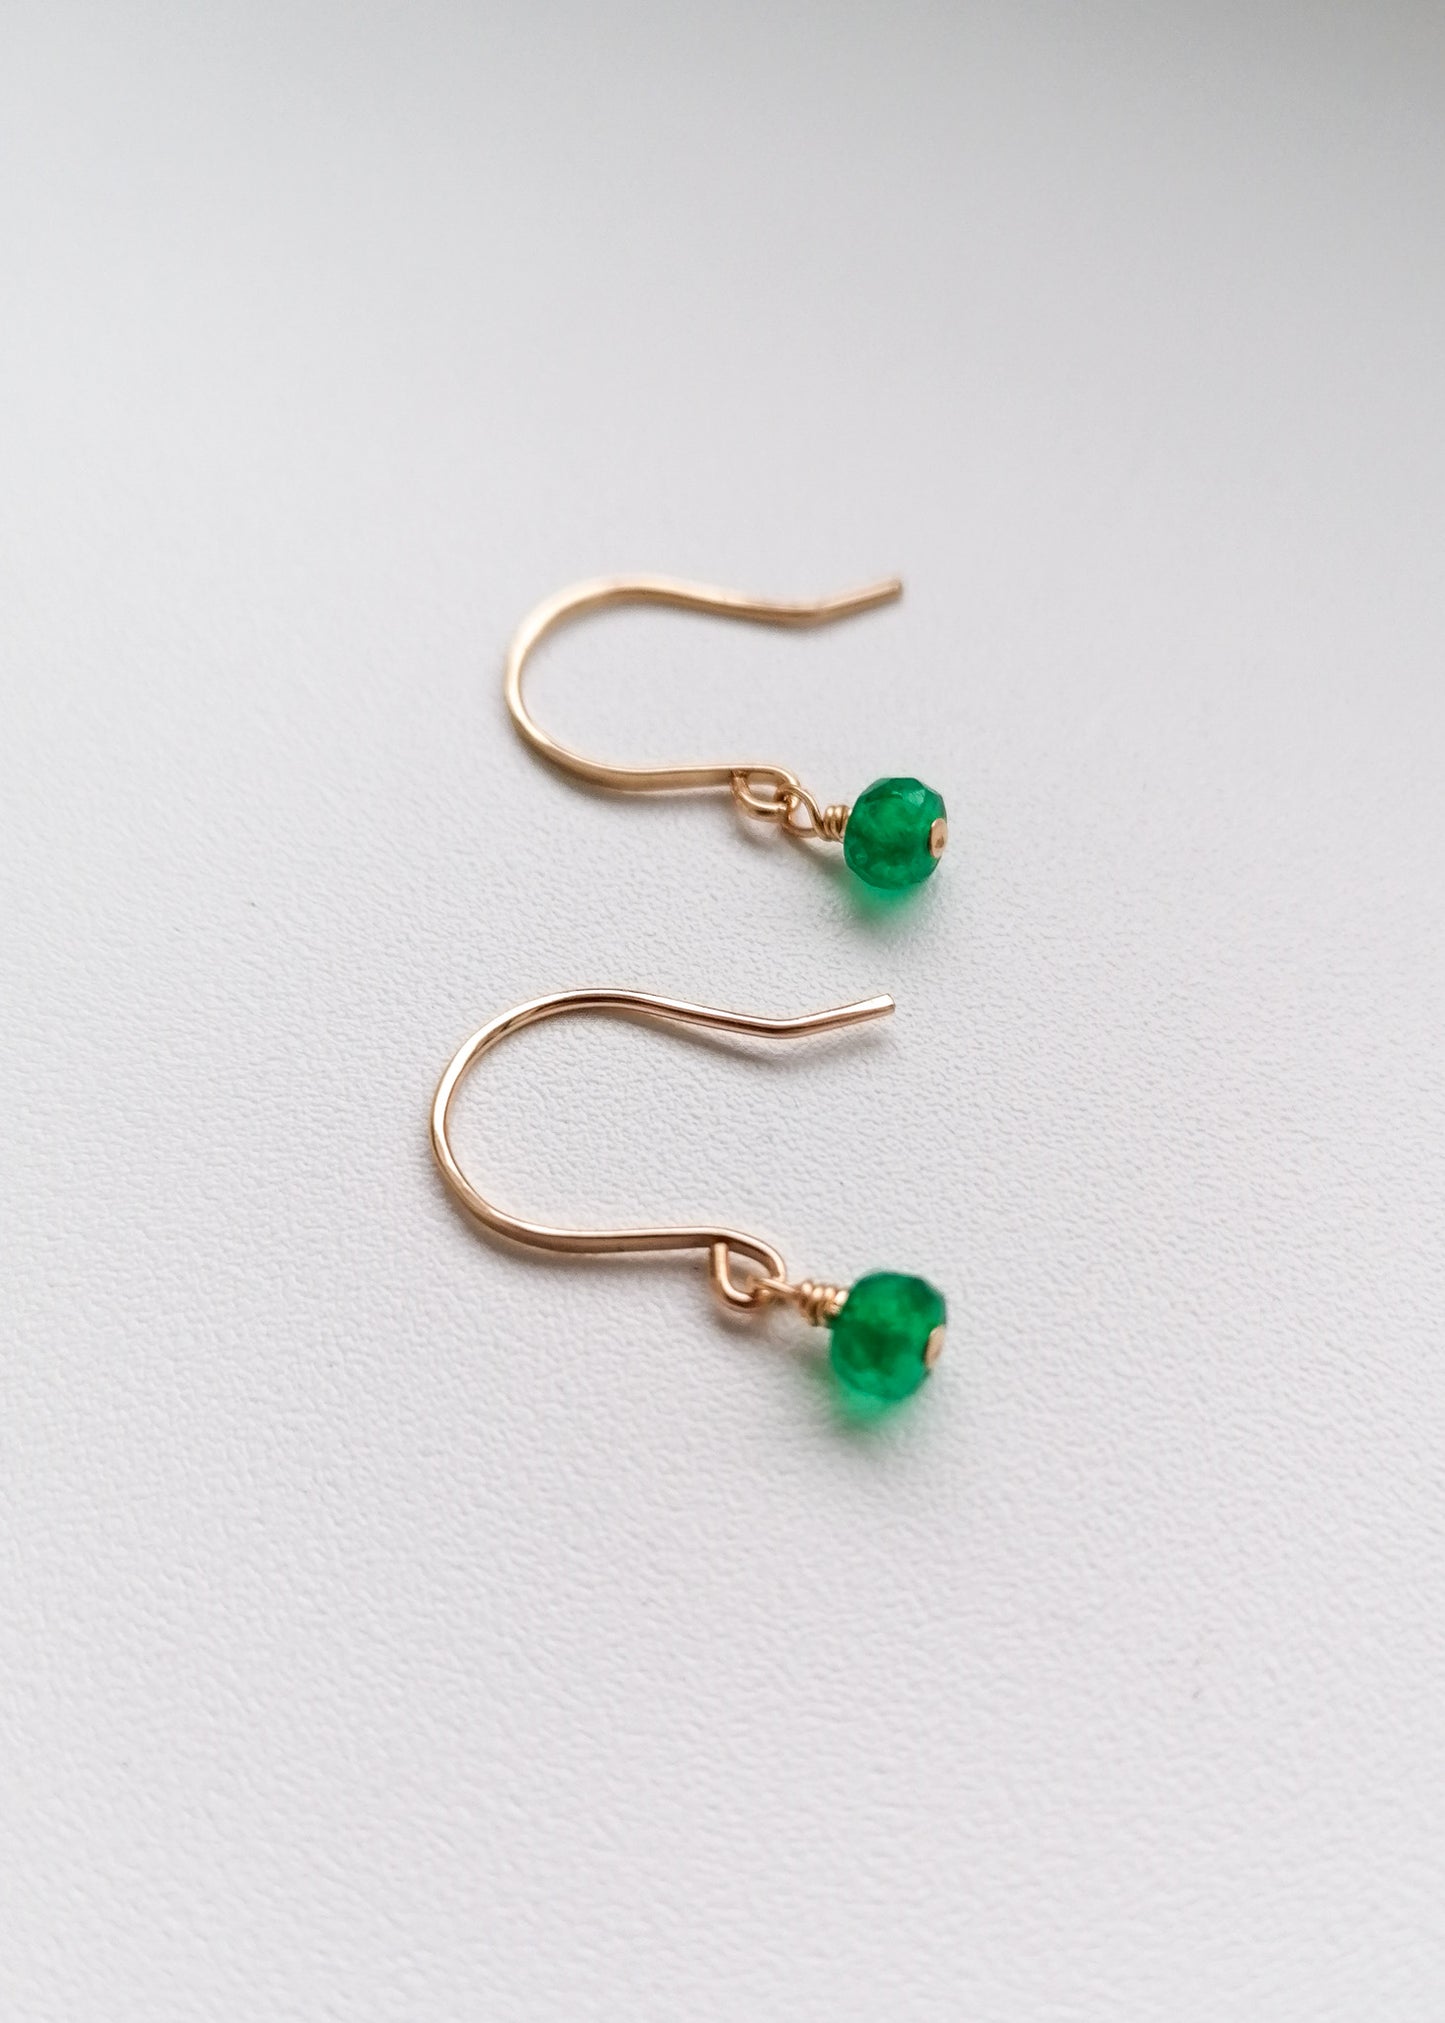 Emerald earrings - gold filled